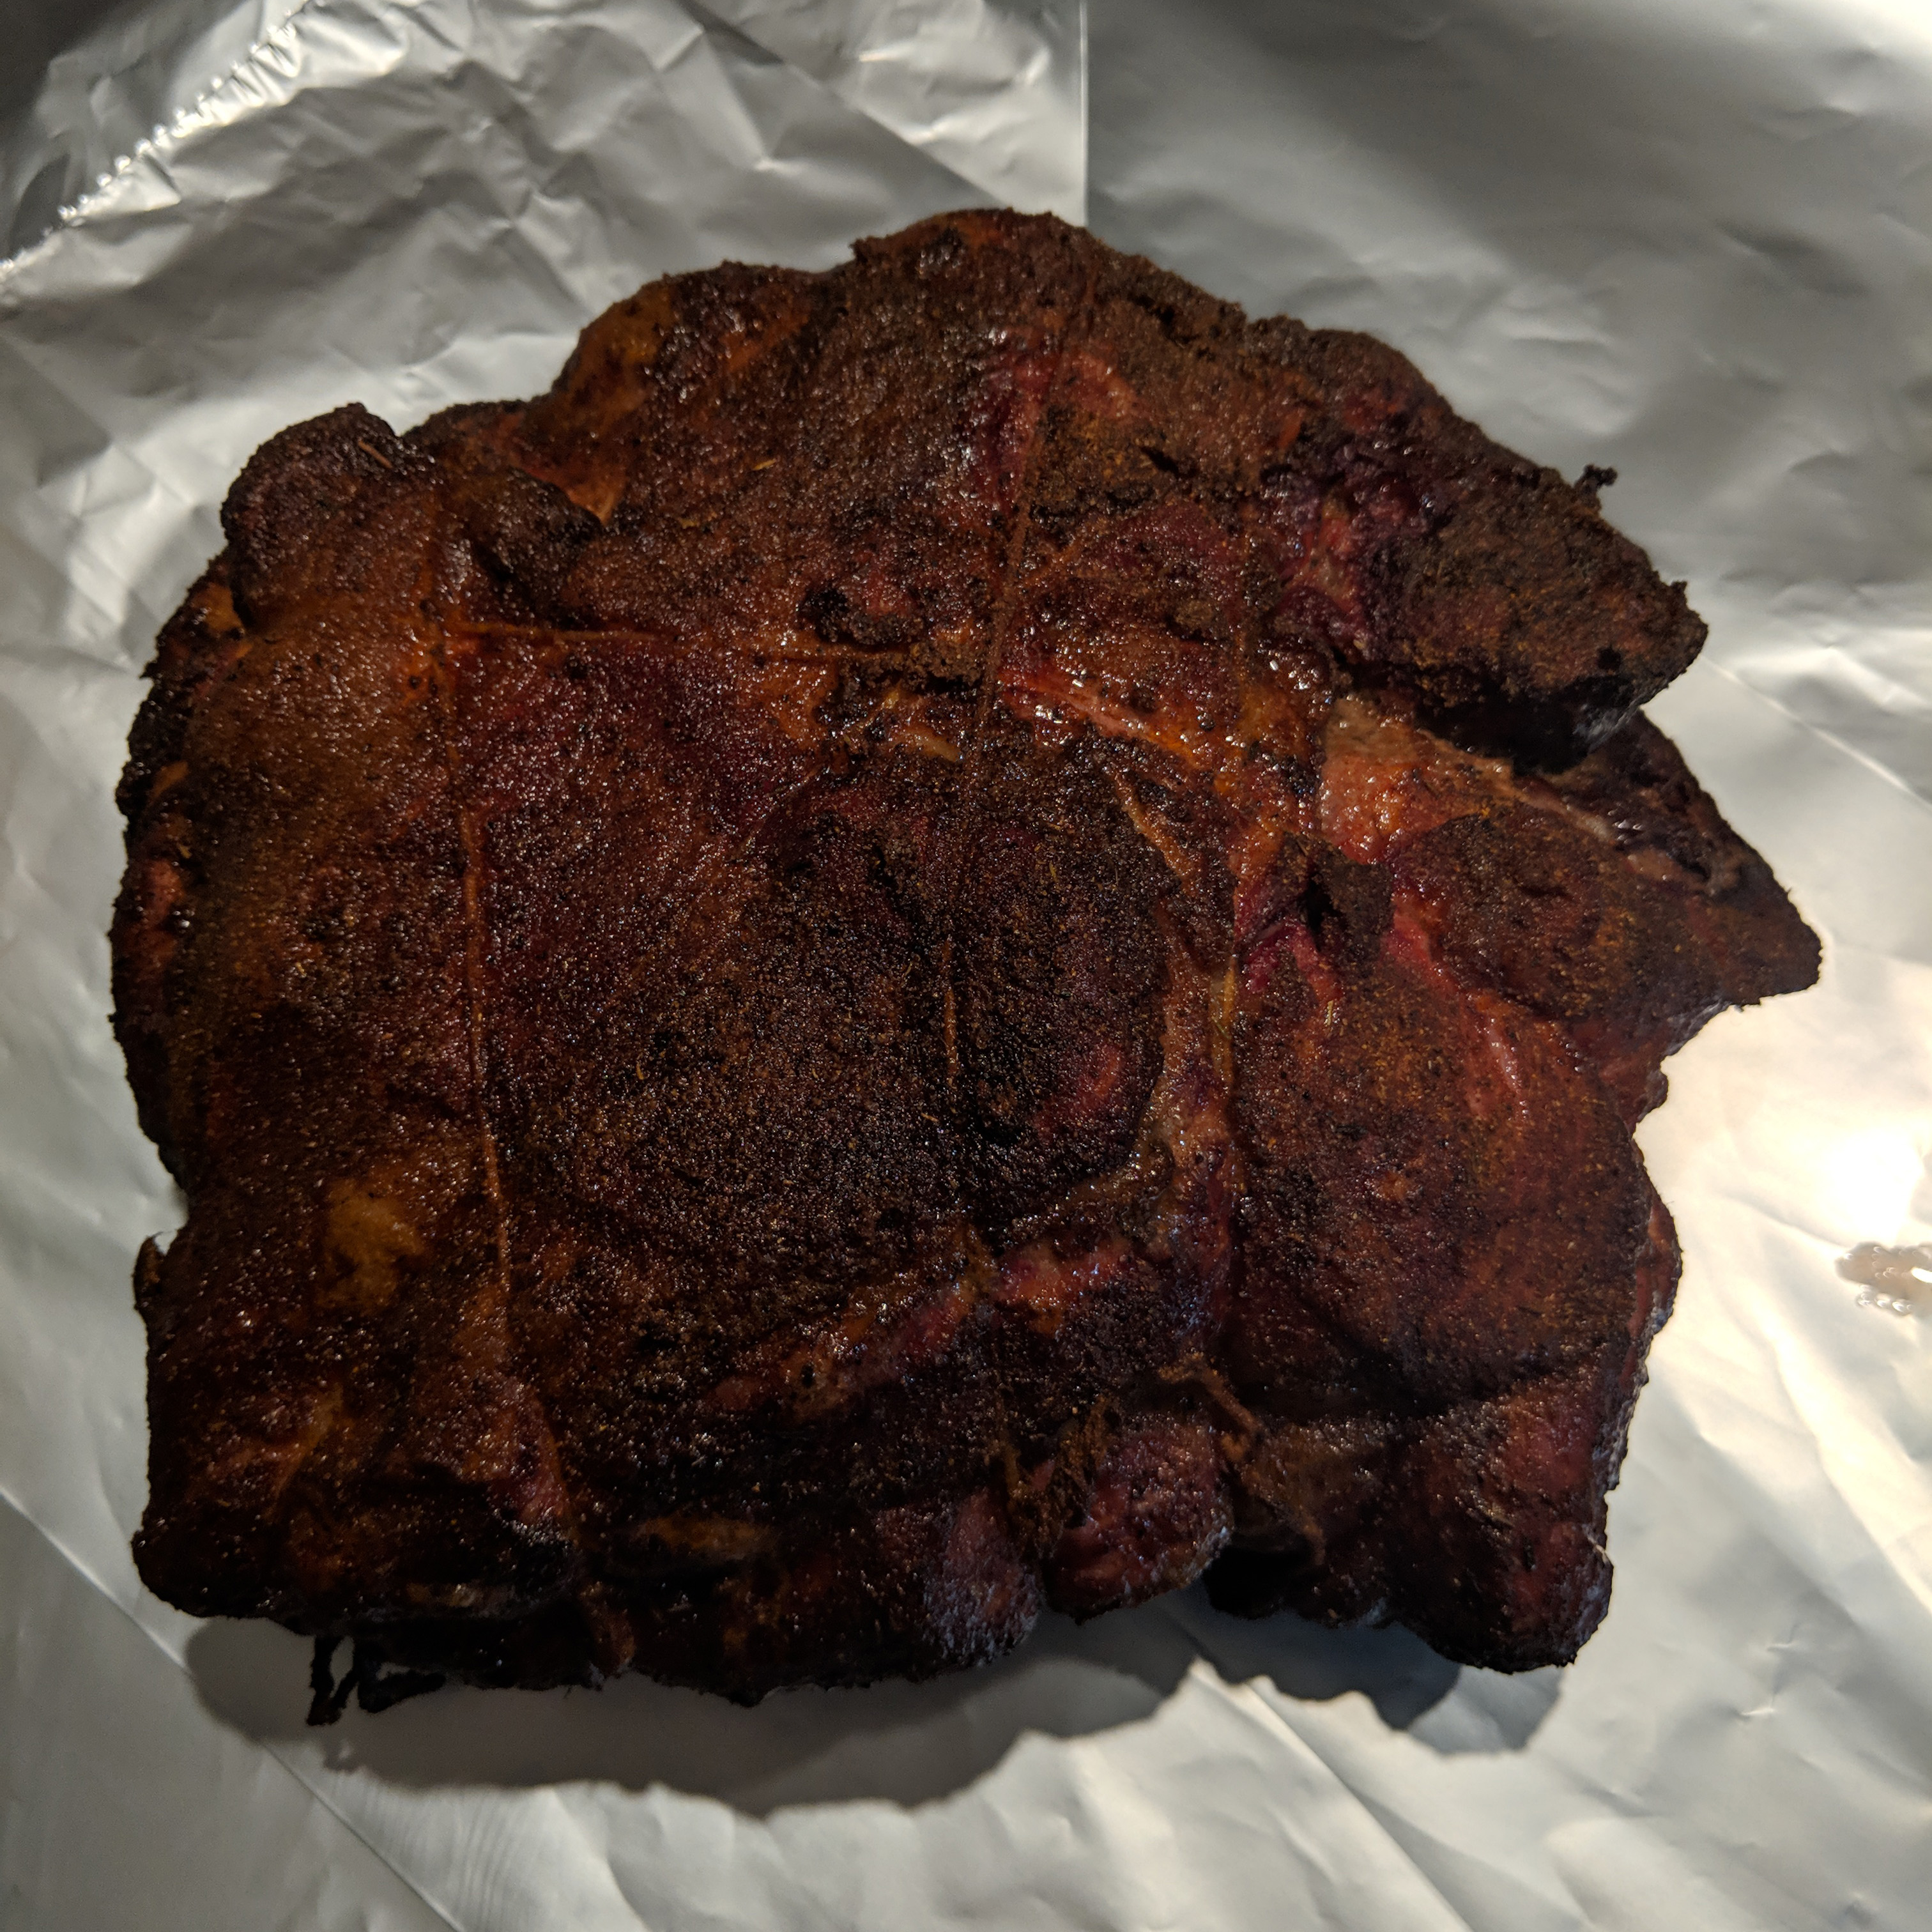 A smoking classic, pulled pork 'butt'.